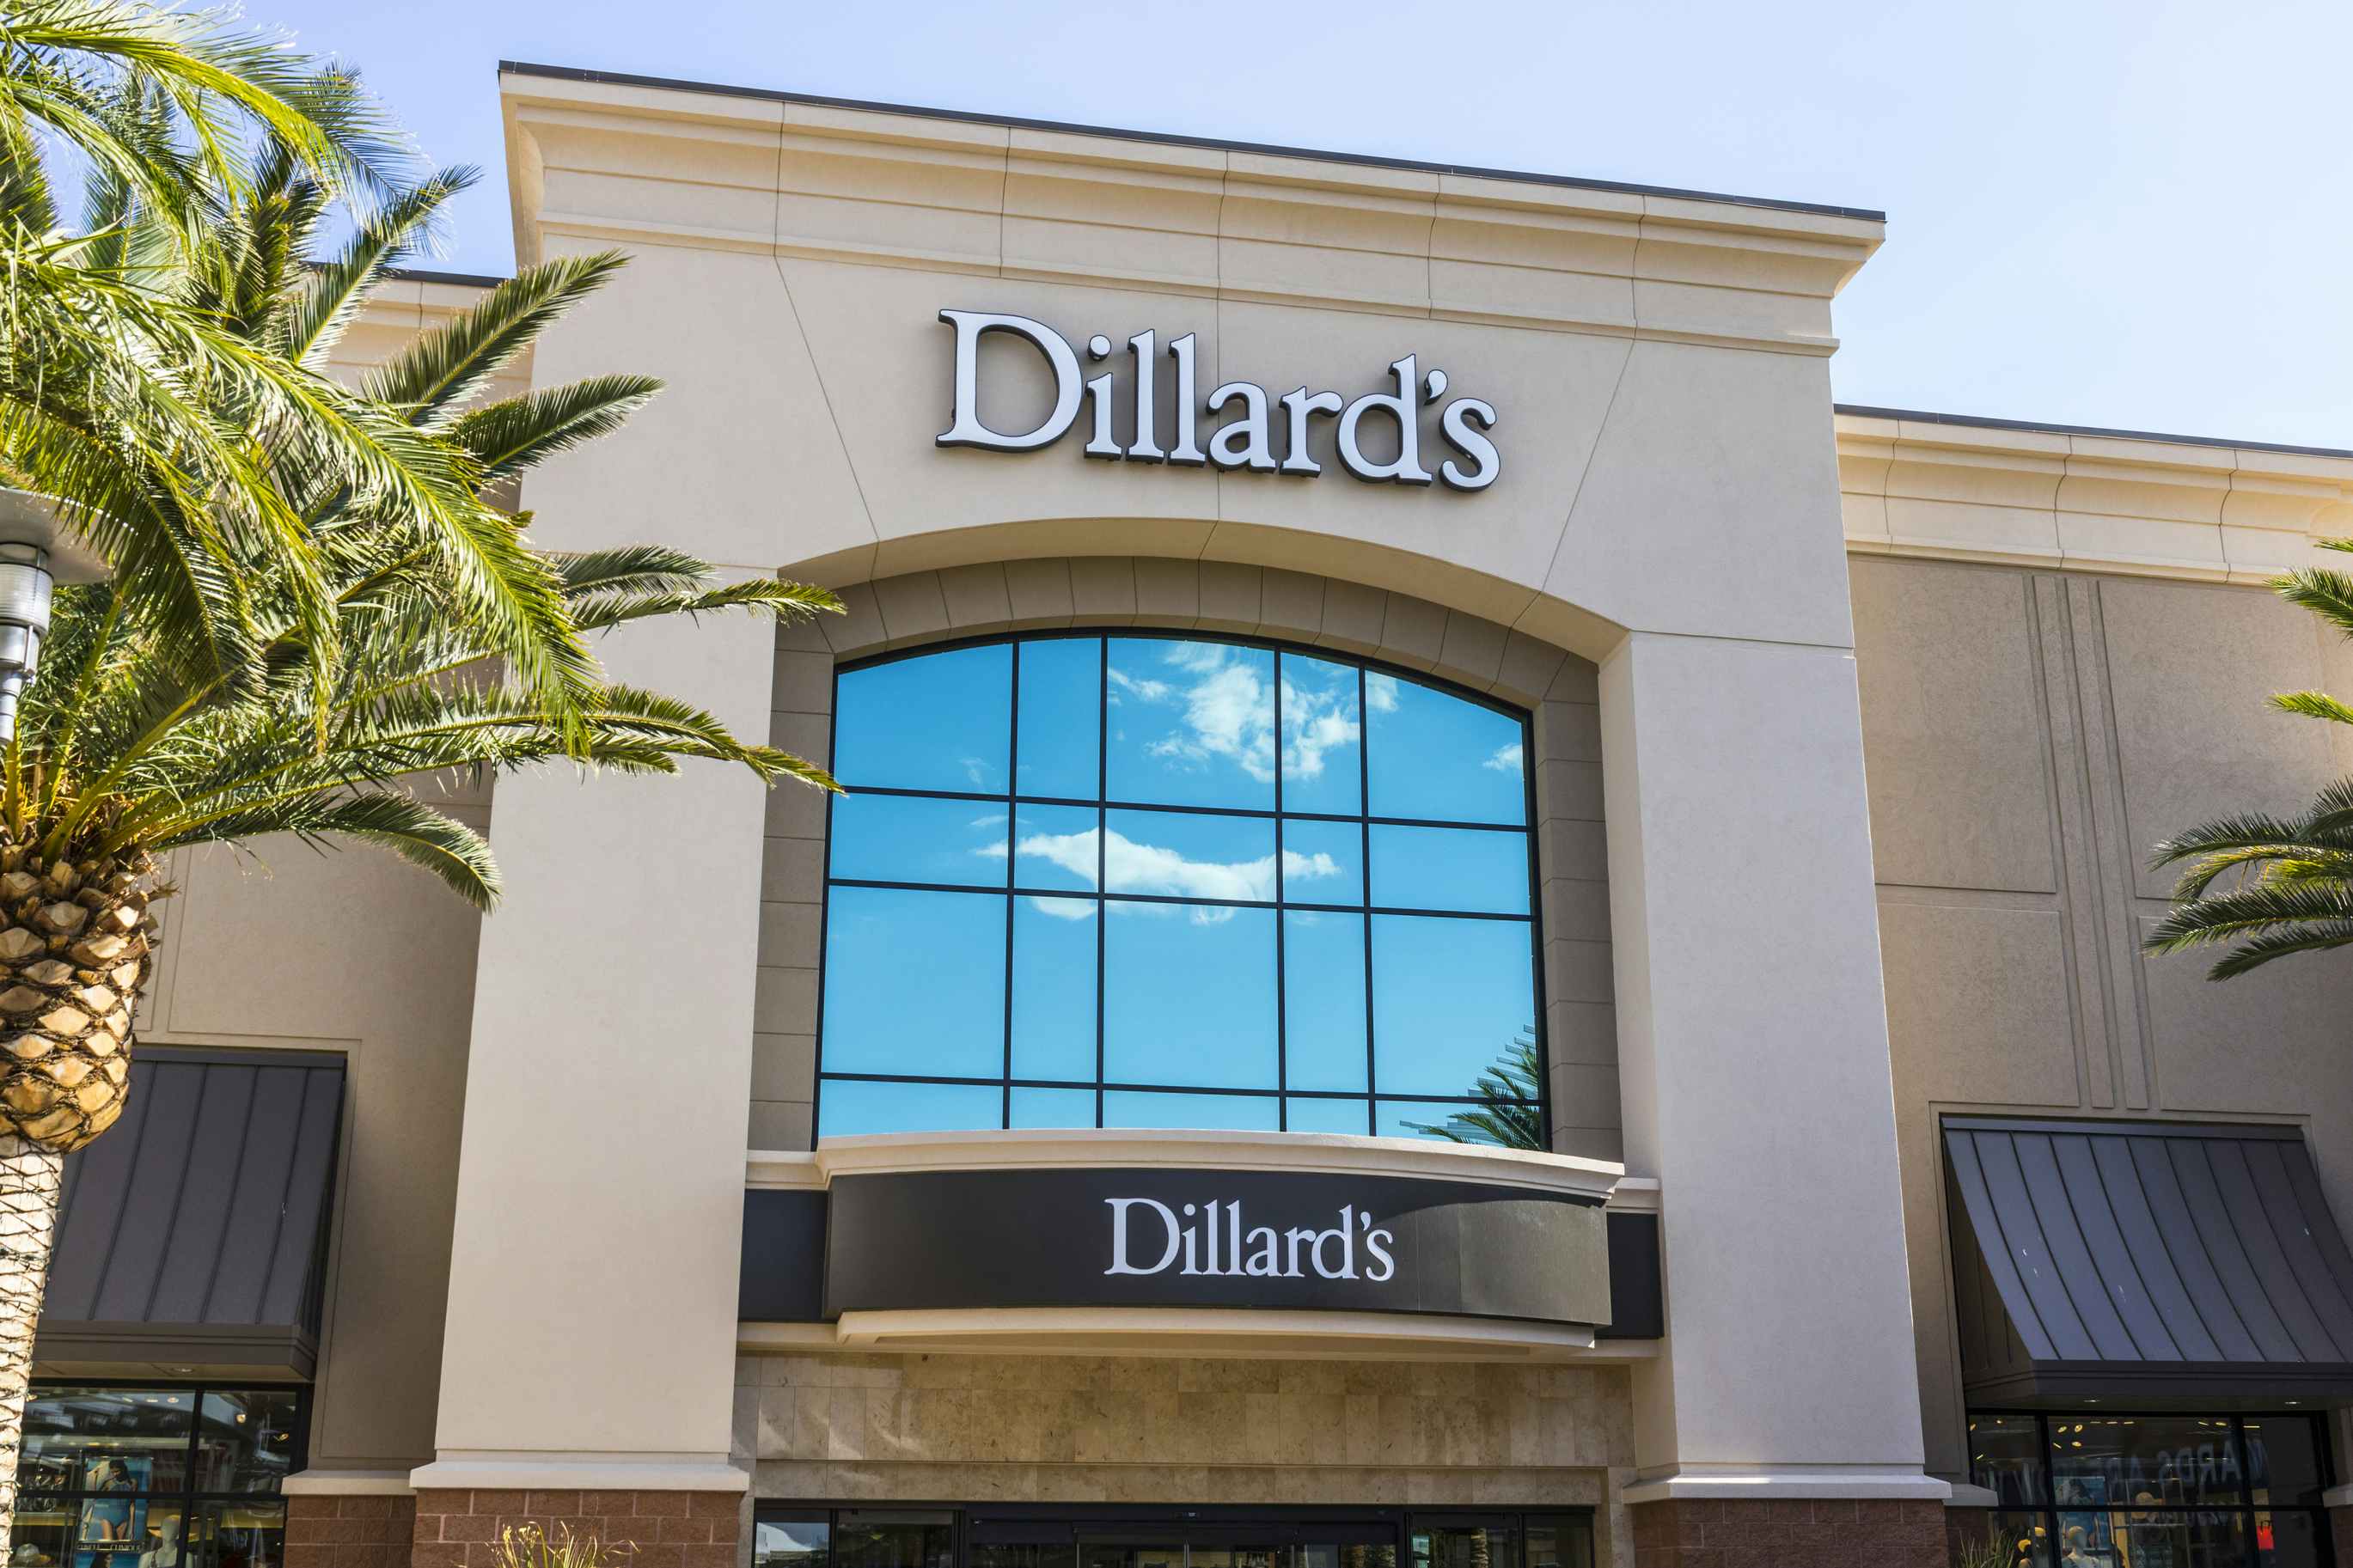 A Dillard's store front